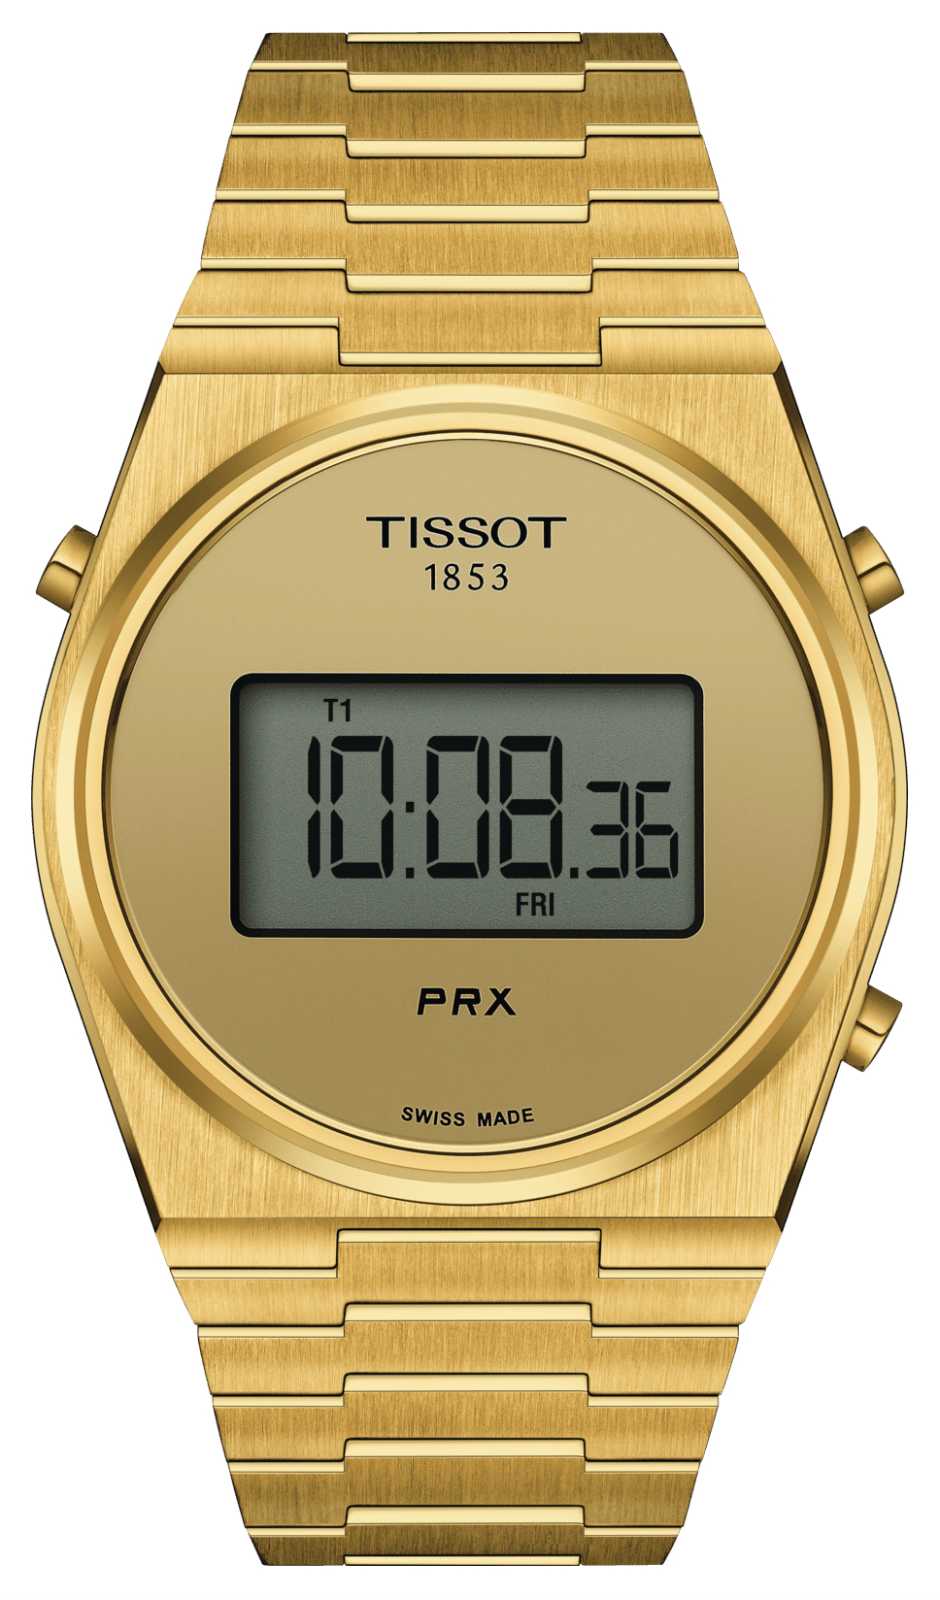 Tissot PRX Digital Quartz Men's Watch T1374633302000